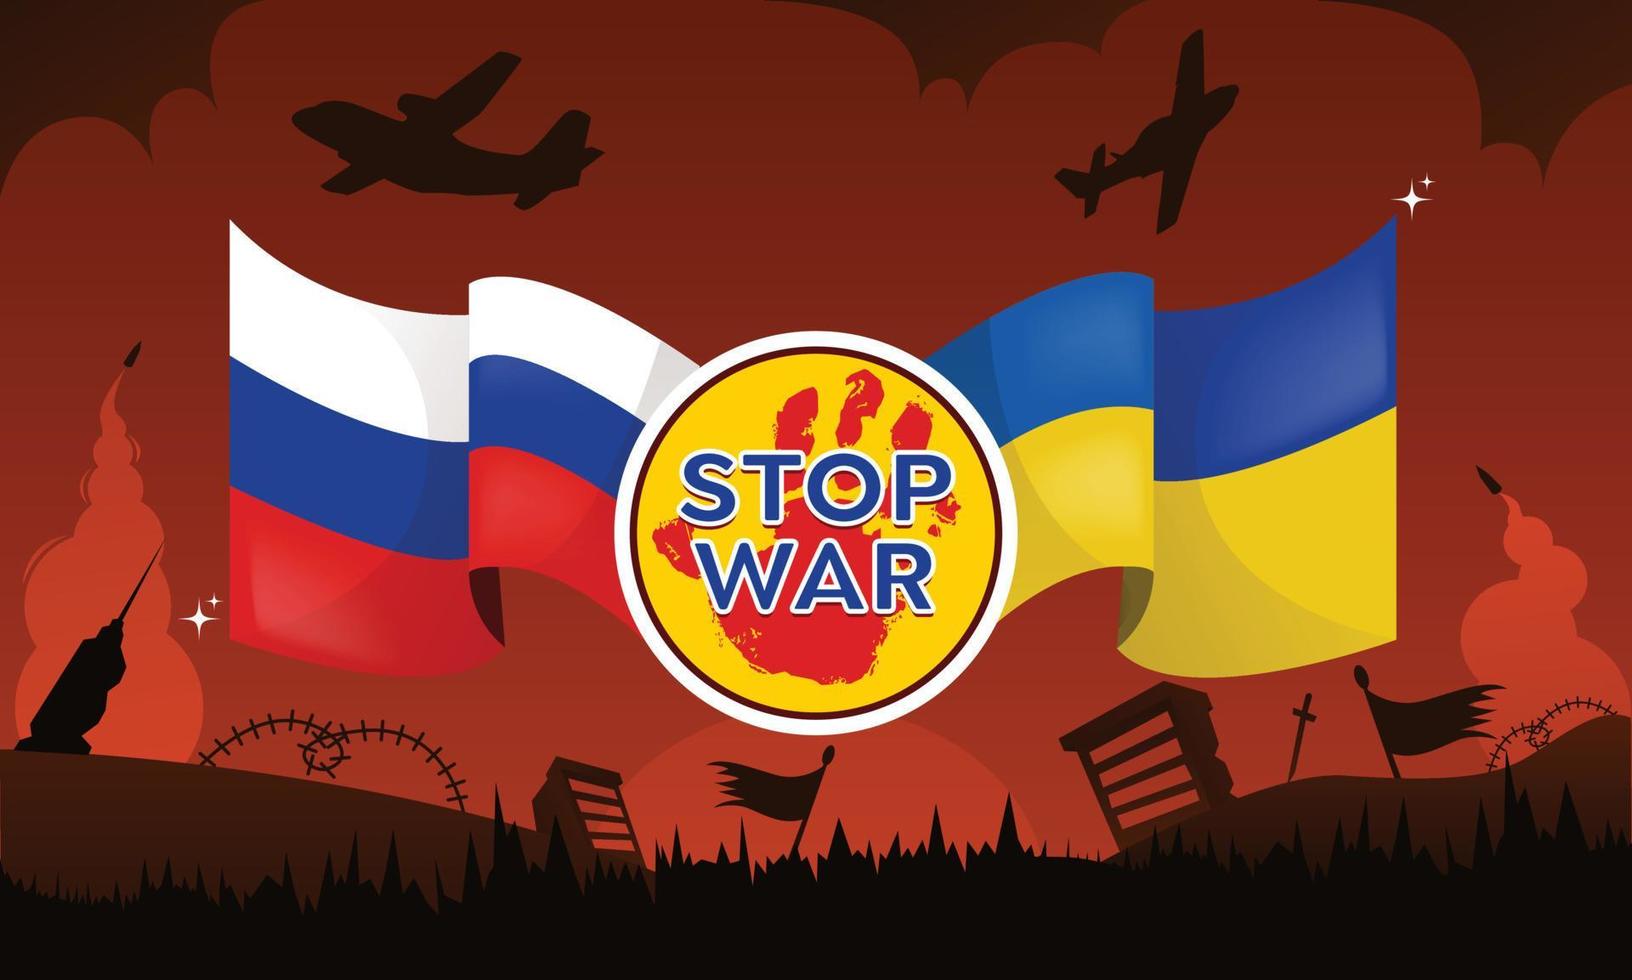 https://static.vecteezy.com/ti/vecteur-libre/p1/6296048-stop-war-russie-et-ukraine-gratuit-vectoriel.jpg